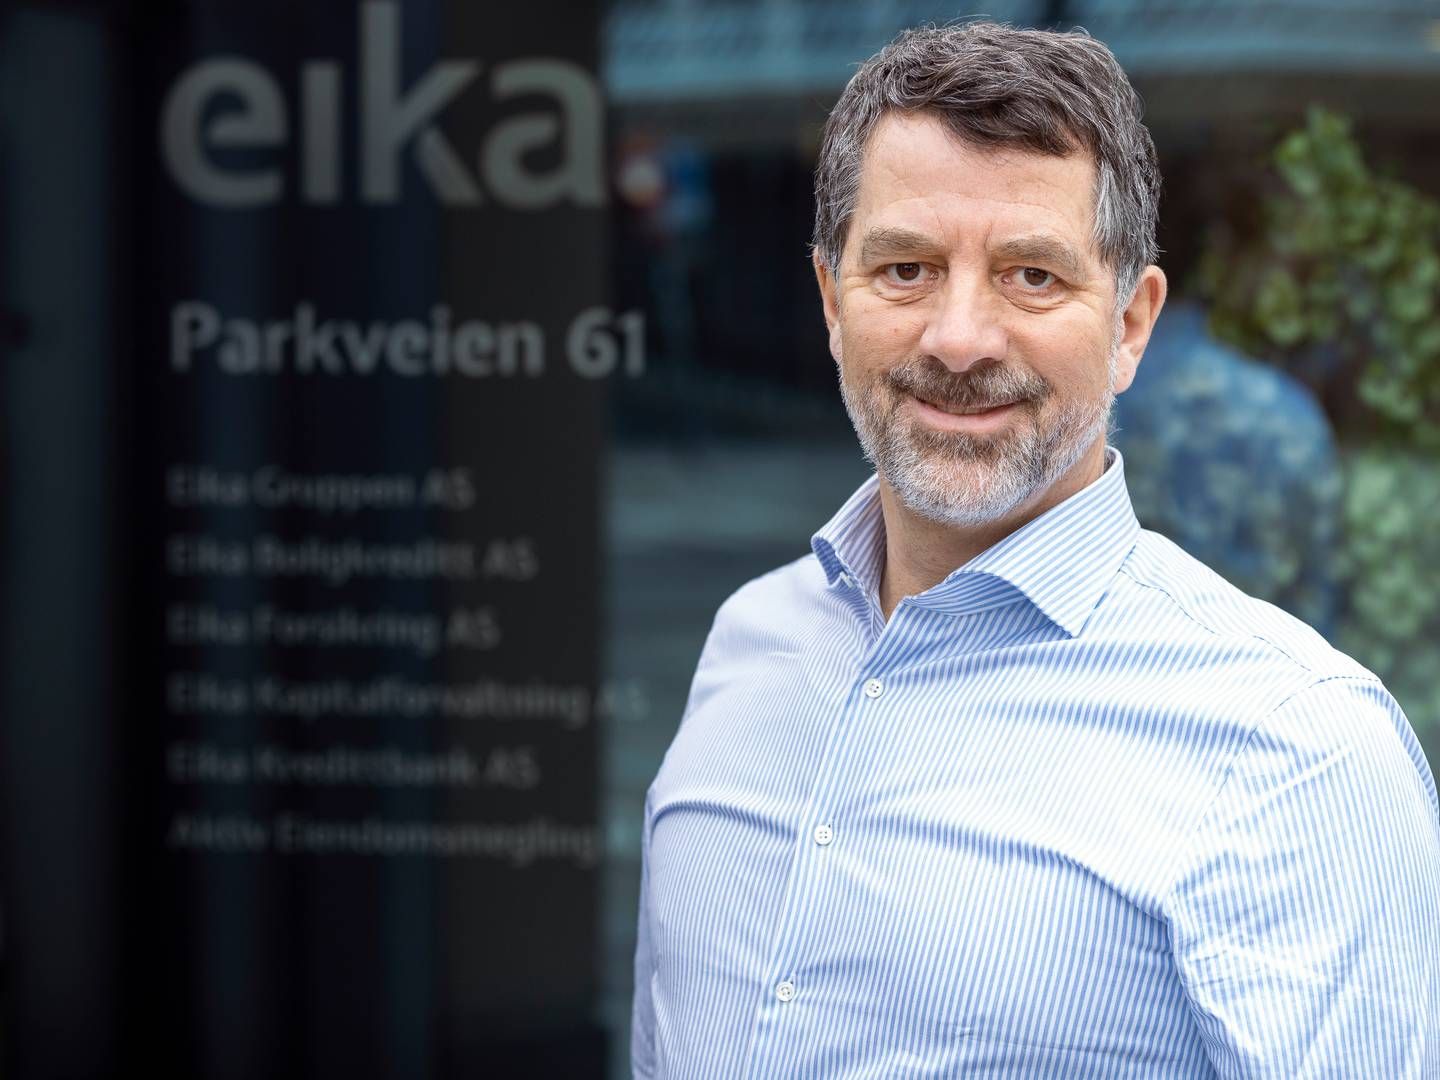 Informasjonsdirektør i Eika Gruppen, Sigurd Ulven. | Foto: Eika Gruppen / PR